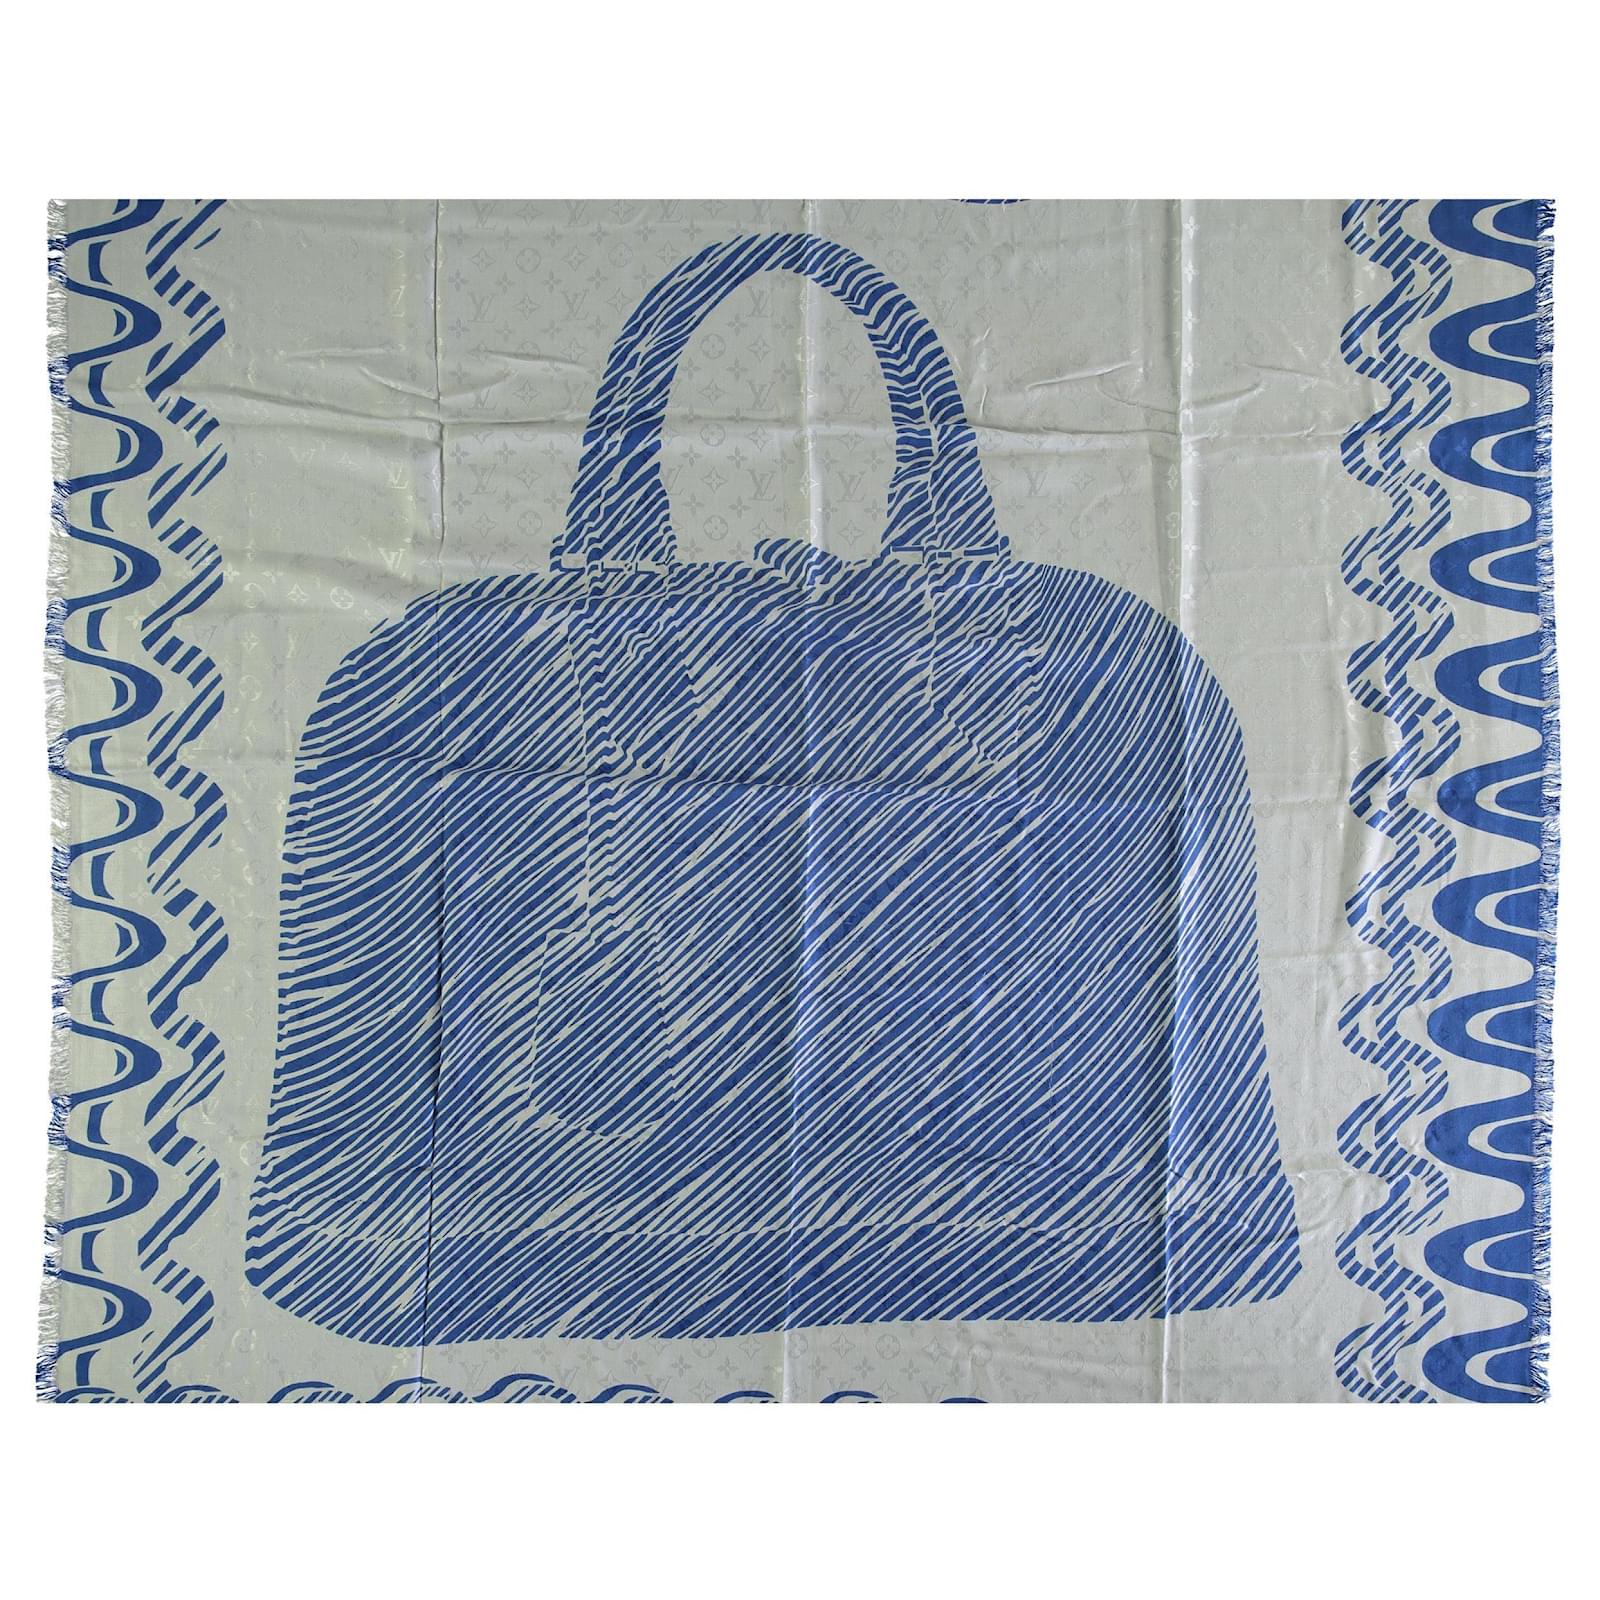 lv bag blue and white